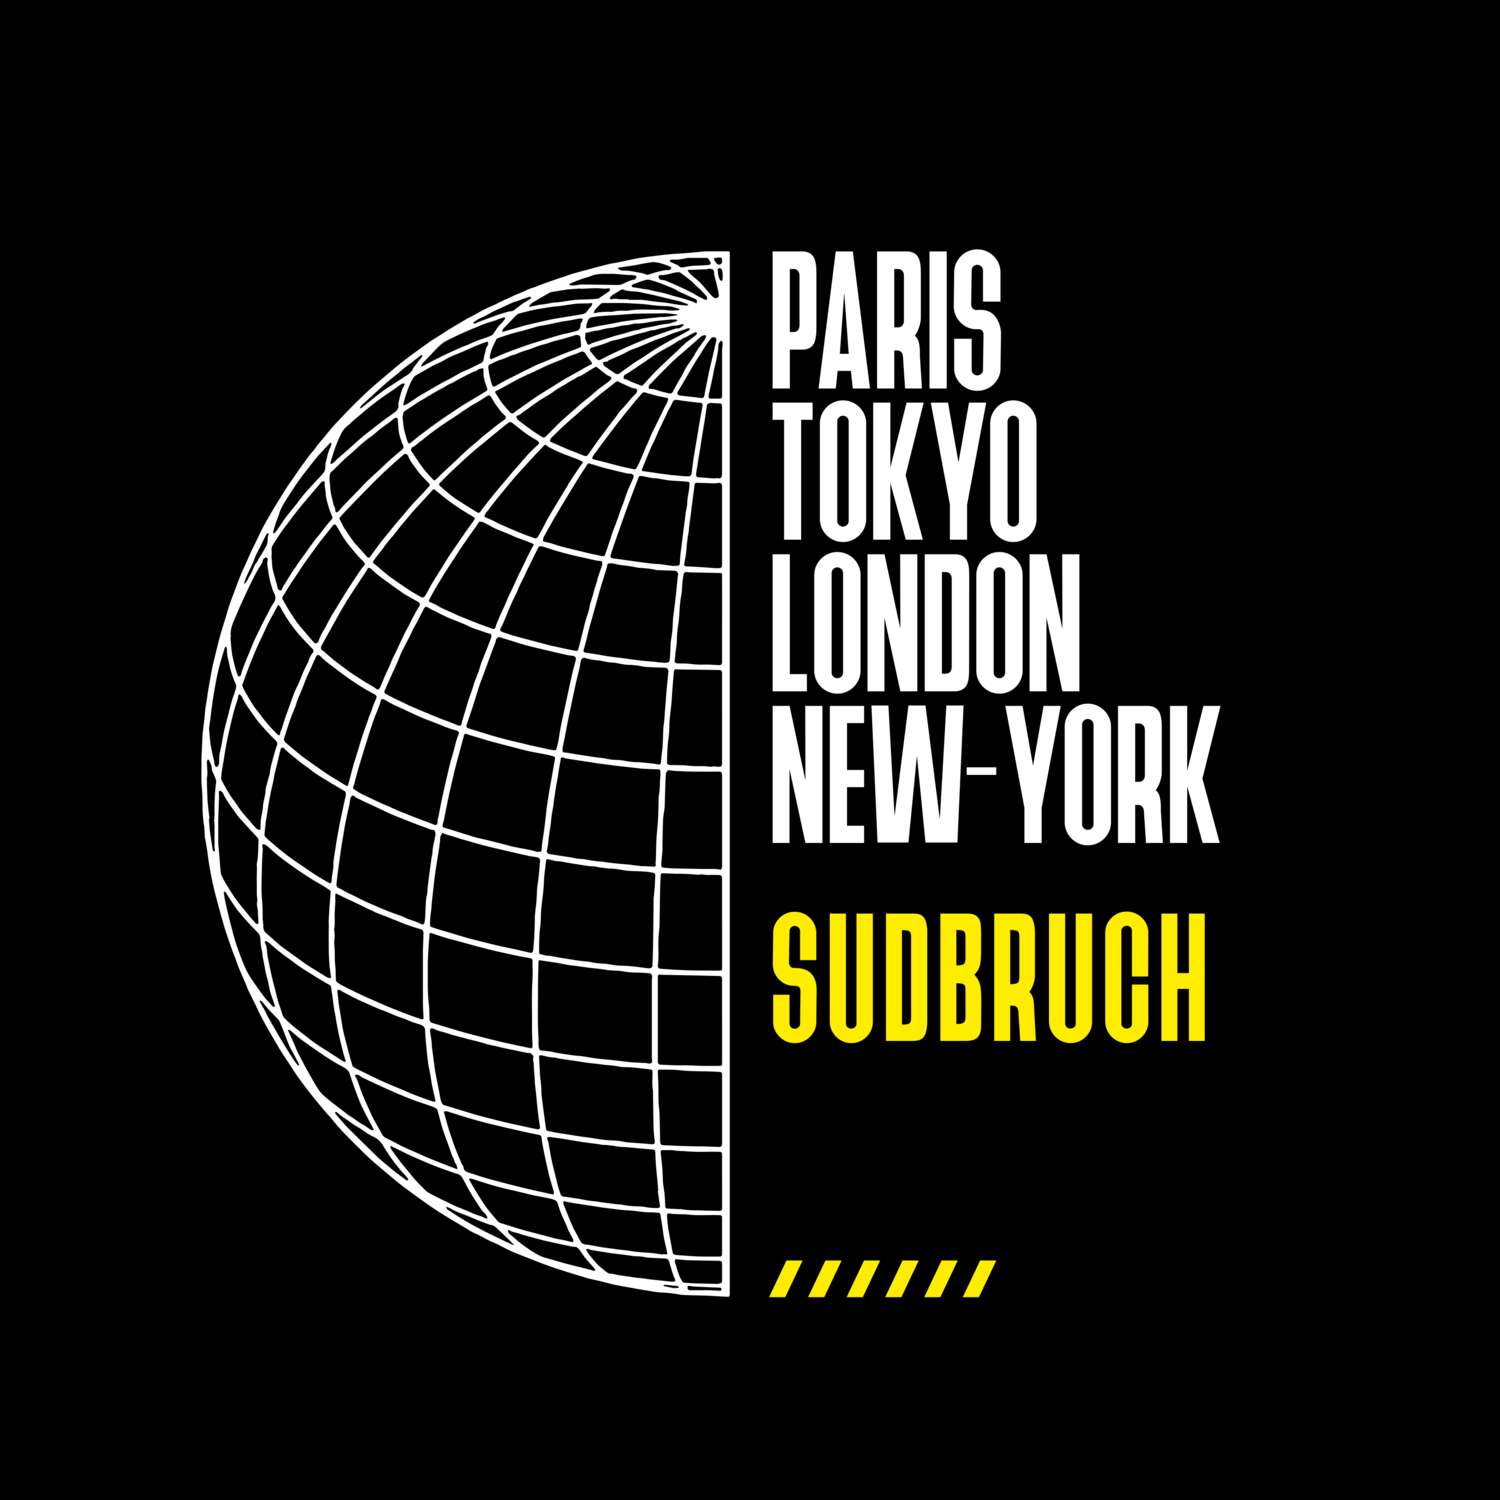 Sudbruch T-Shirt »Paris Tokyo London«